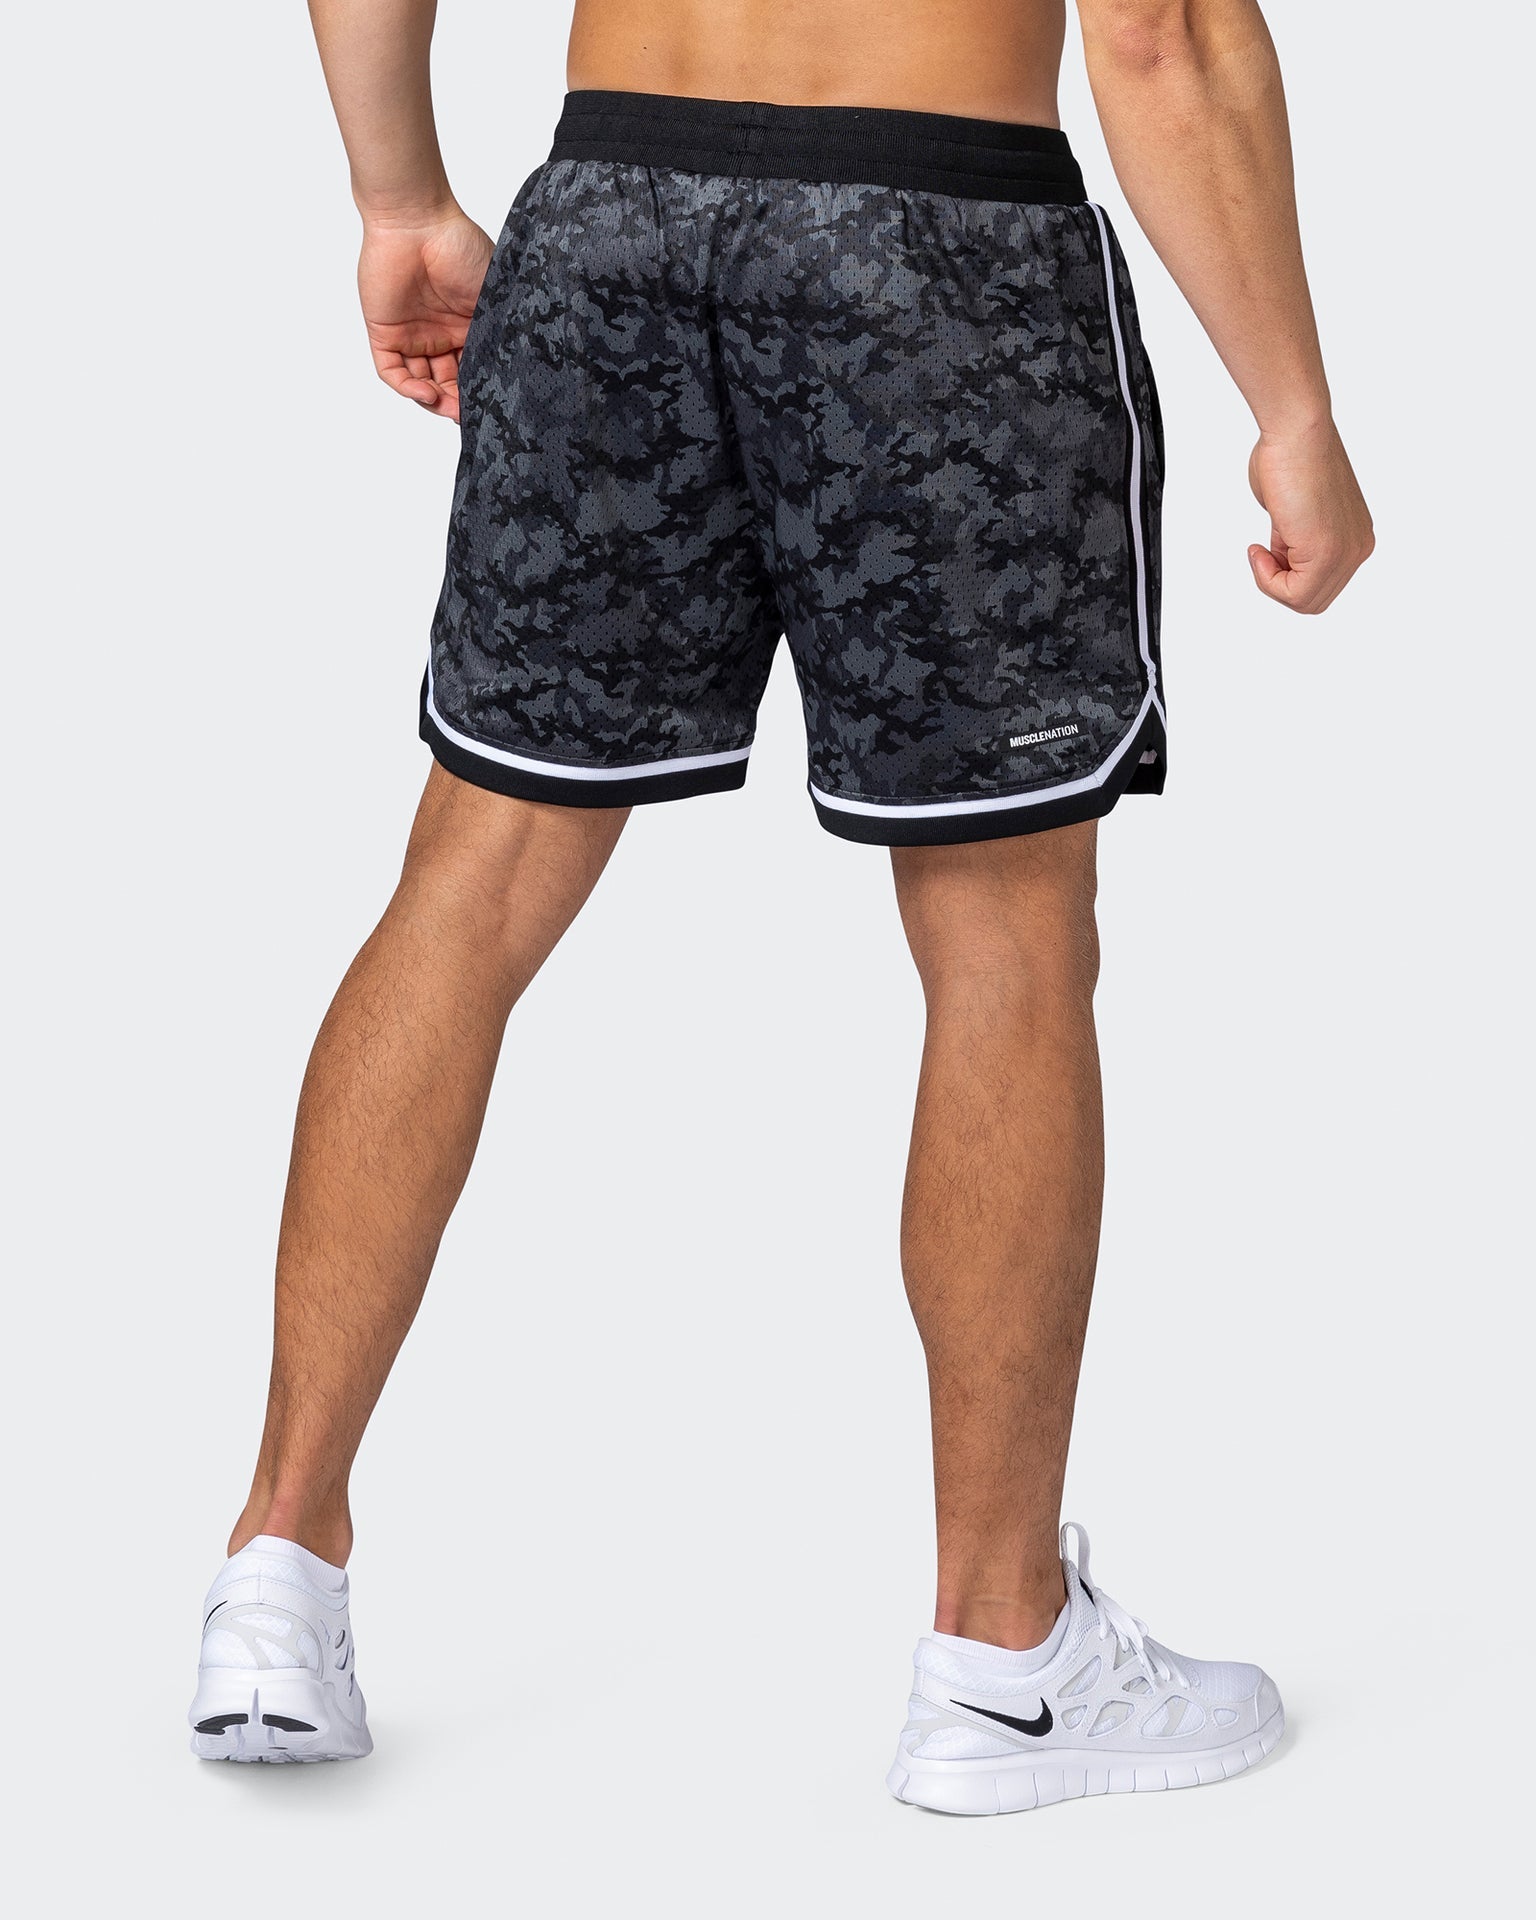 musclenation Shorts Mens 5" Basketball Shorts - Monochrome Camo Print